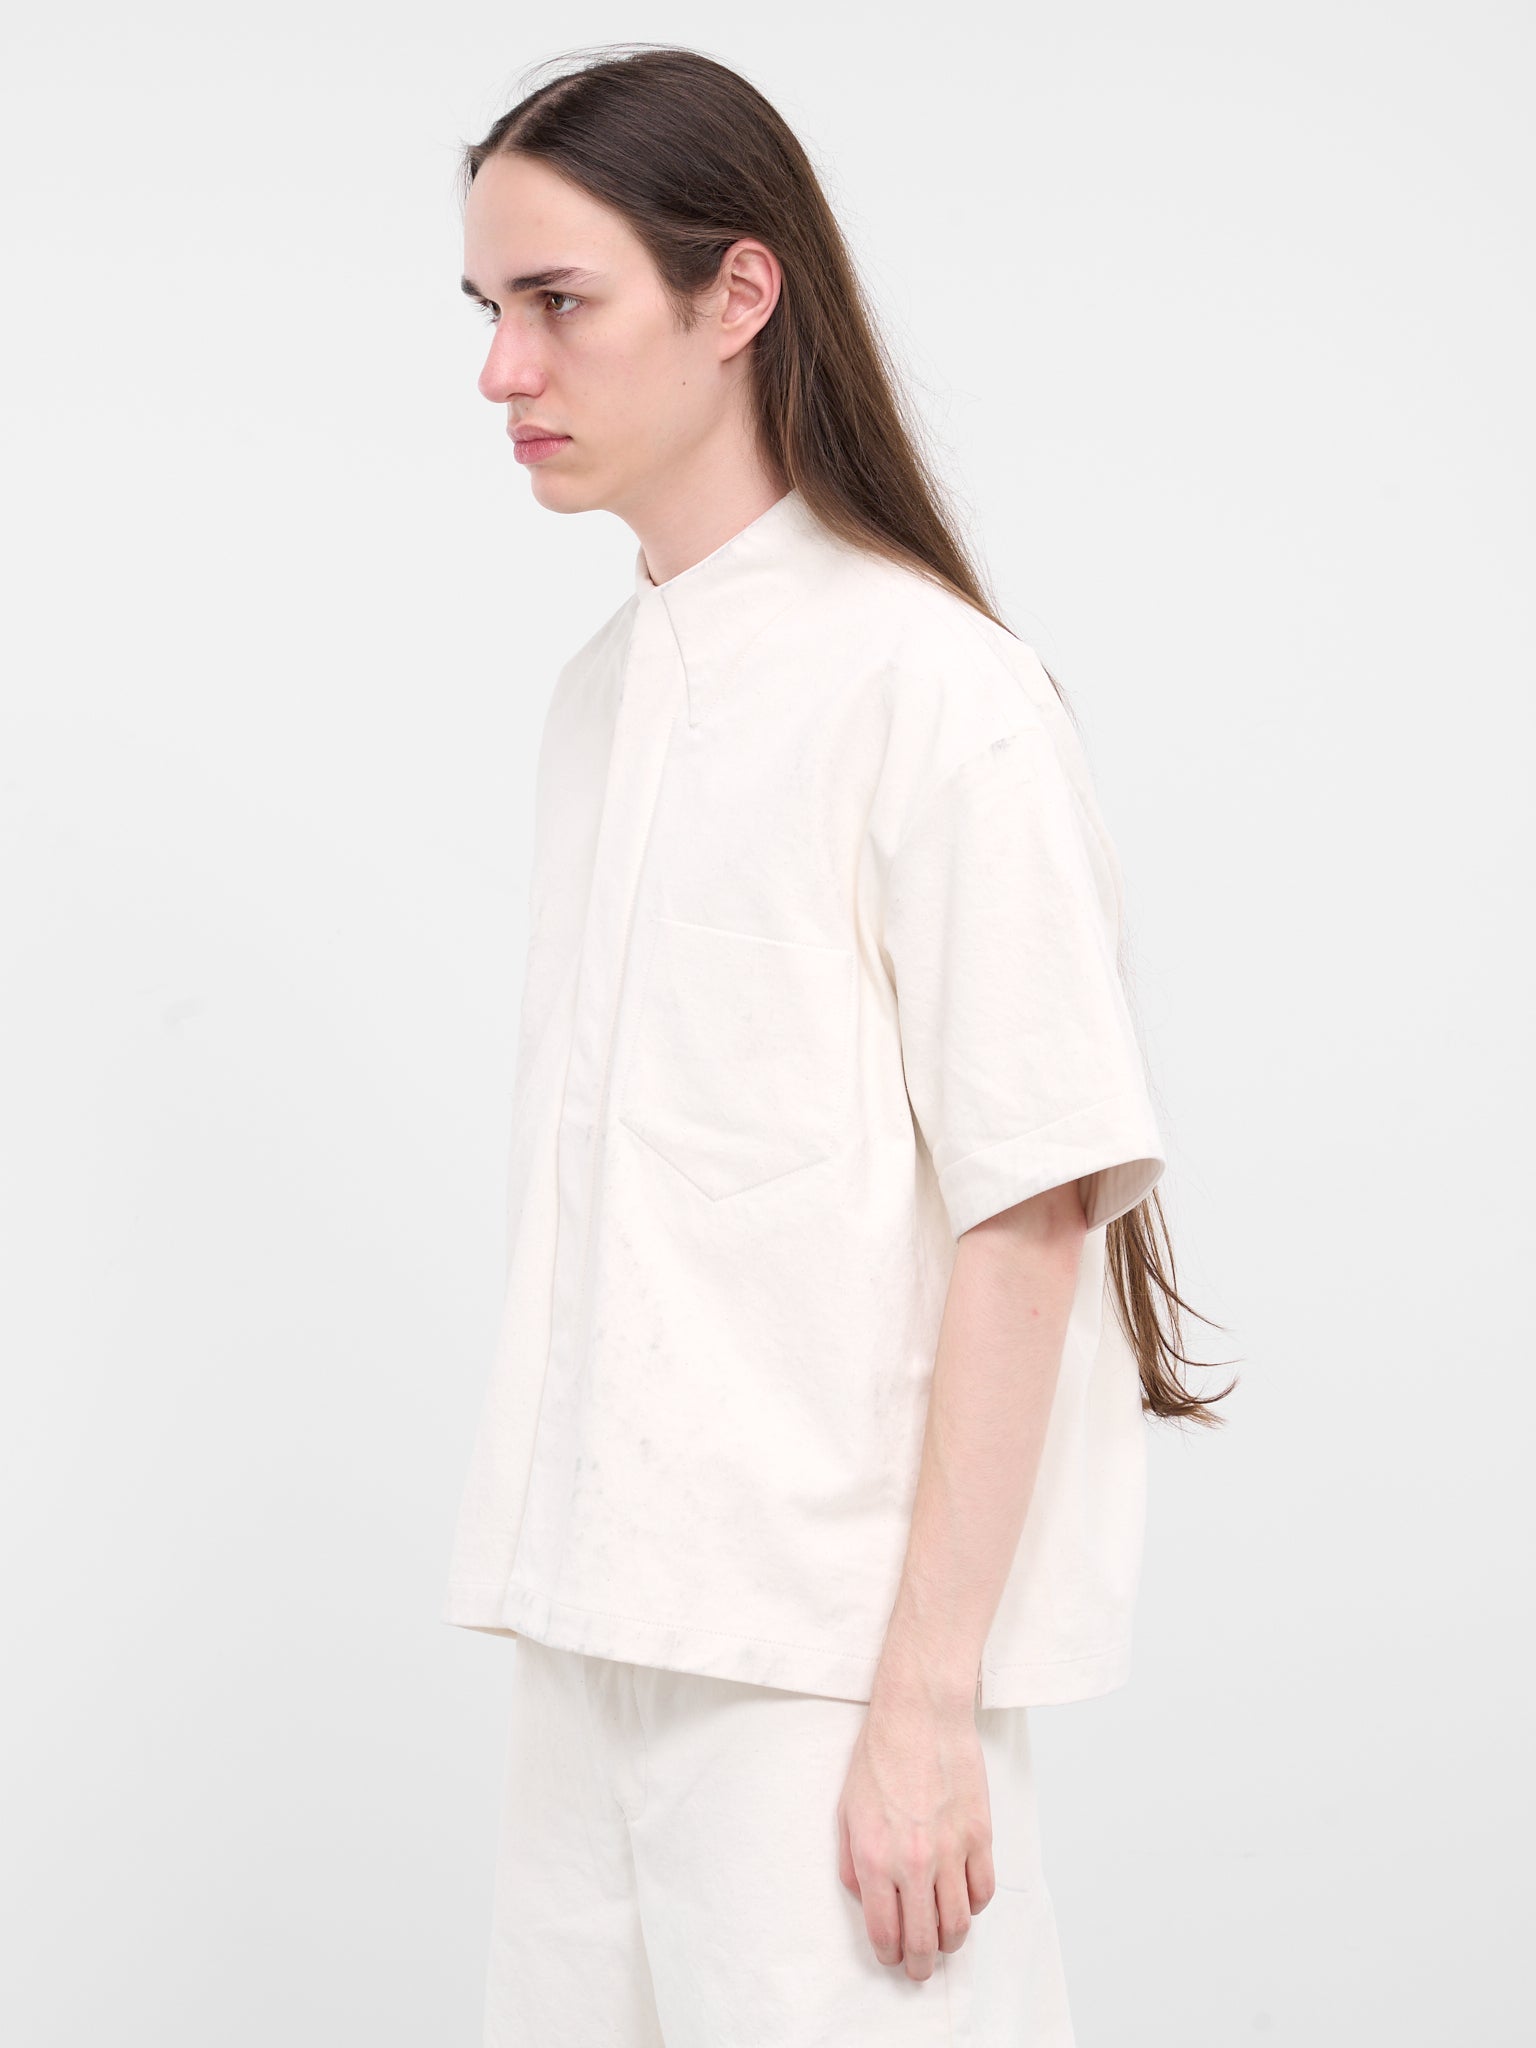 Molded Bold Square Shirt (SQ4MD-418-020-WHITE)